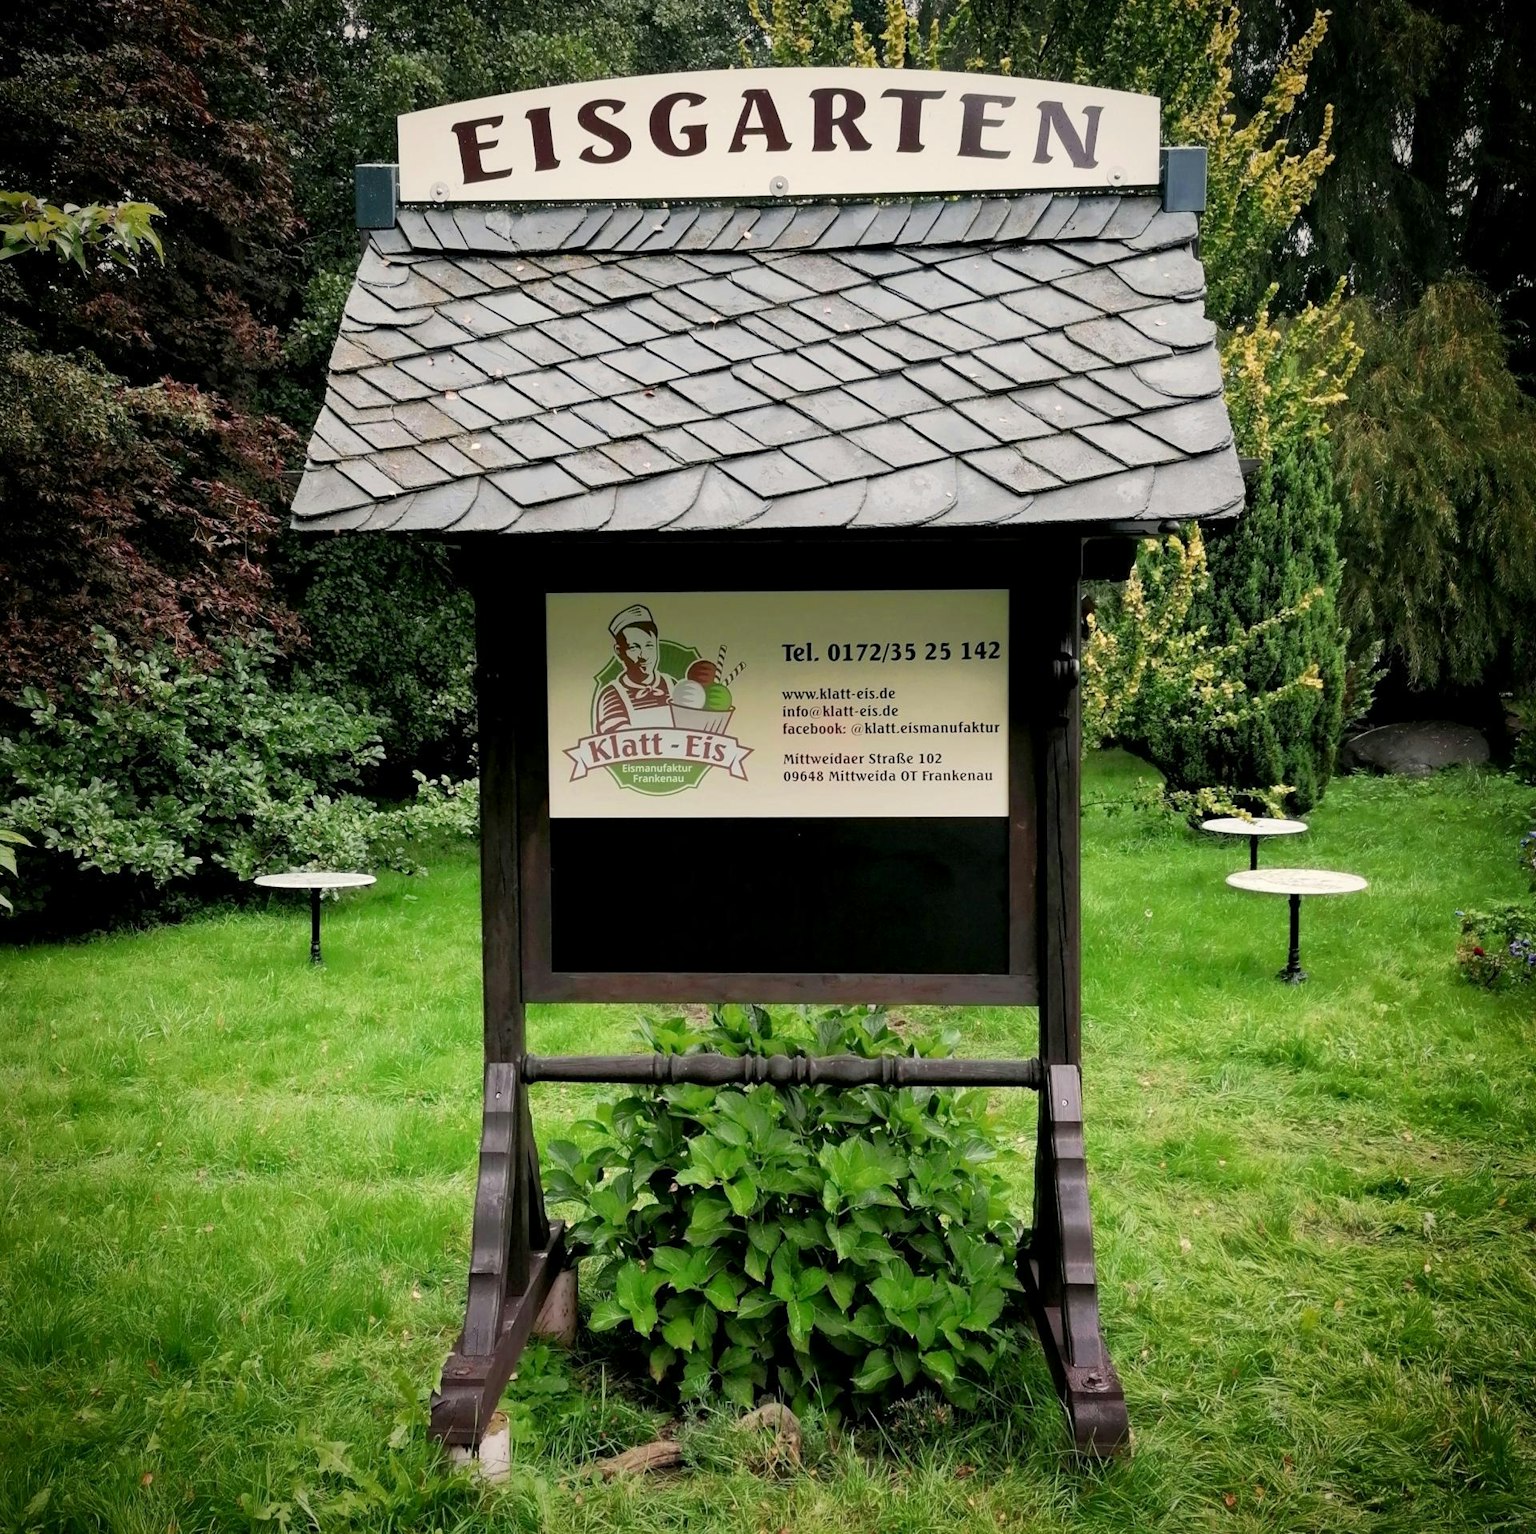 Unser Klatt-Eis Eisgarten